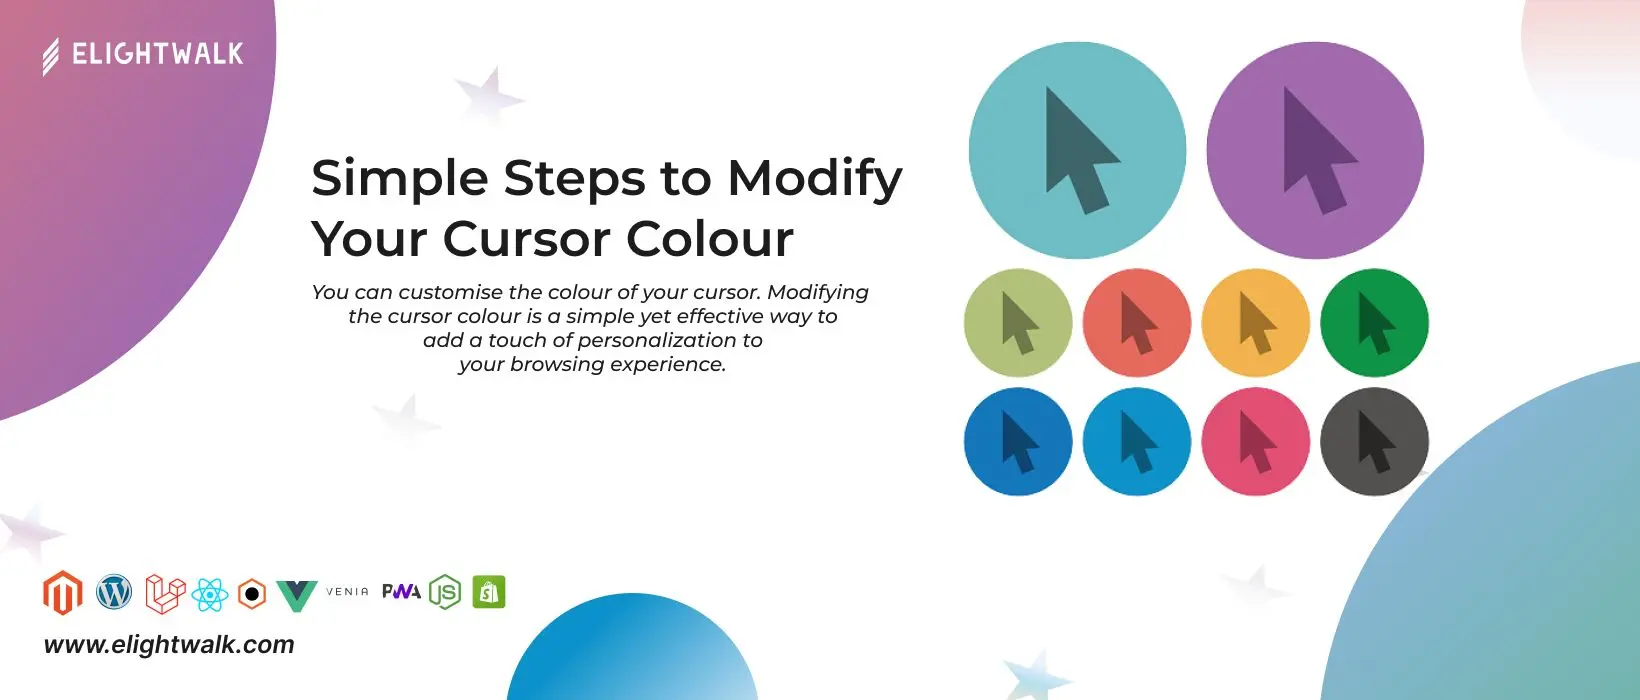 Simple Steps to Modify Your Cursor Colour